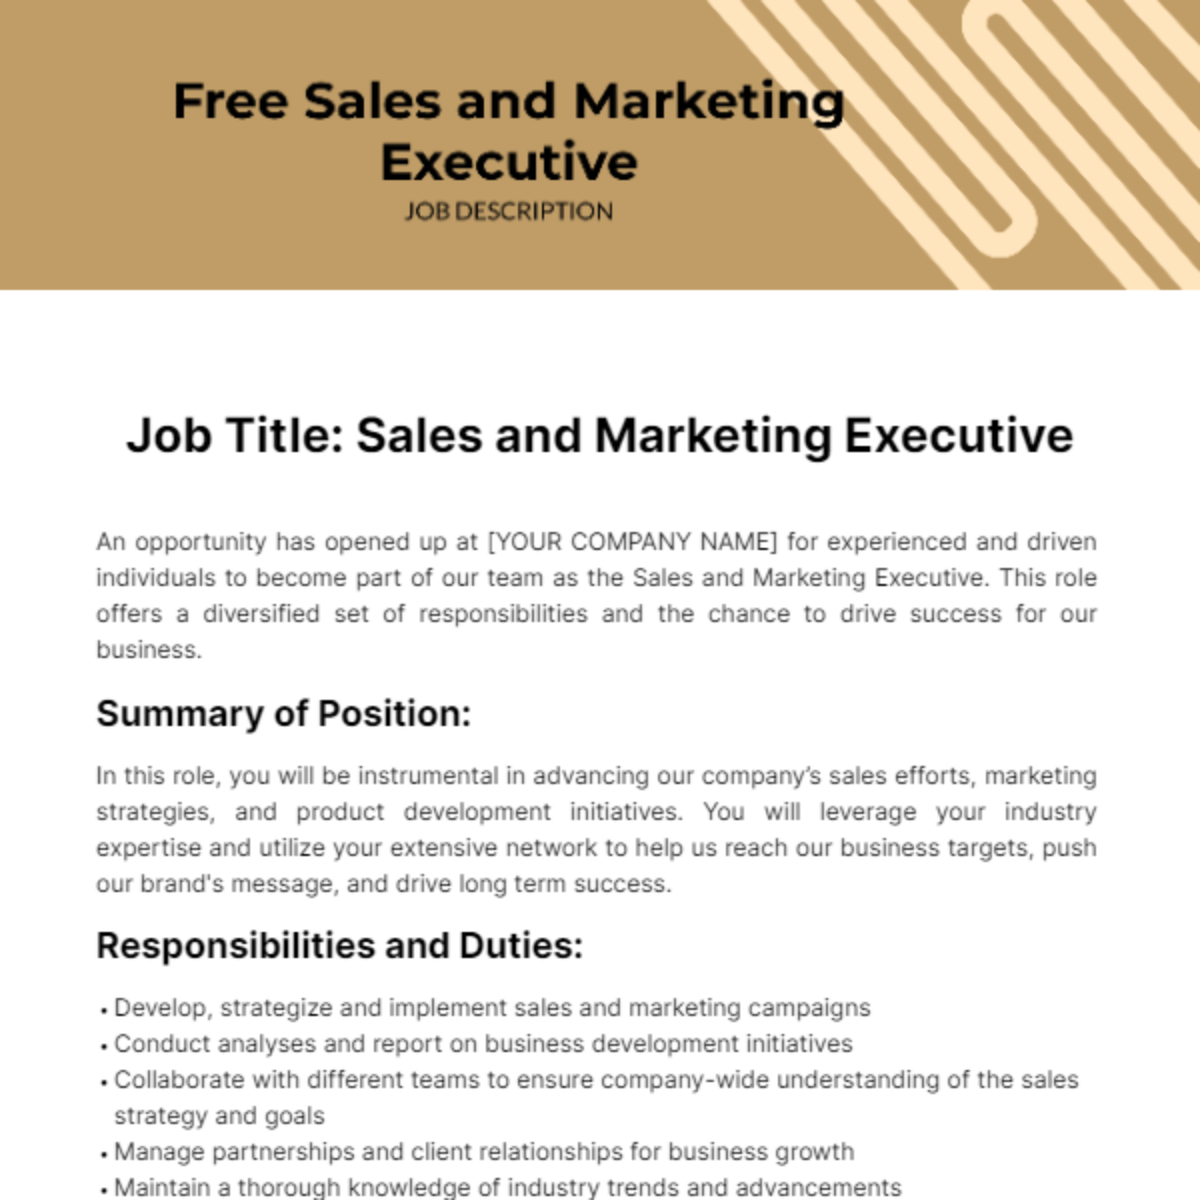 Free Sales and Marketing Executive Job Description Template